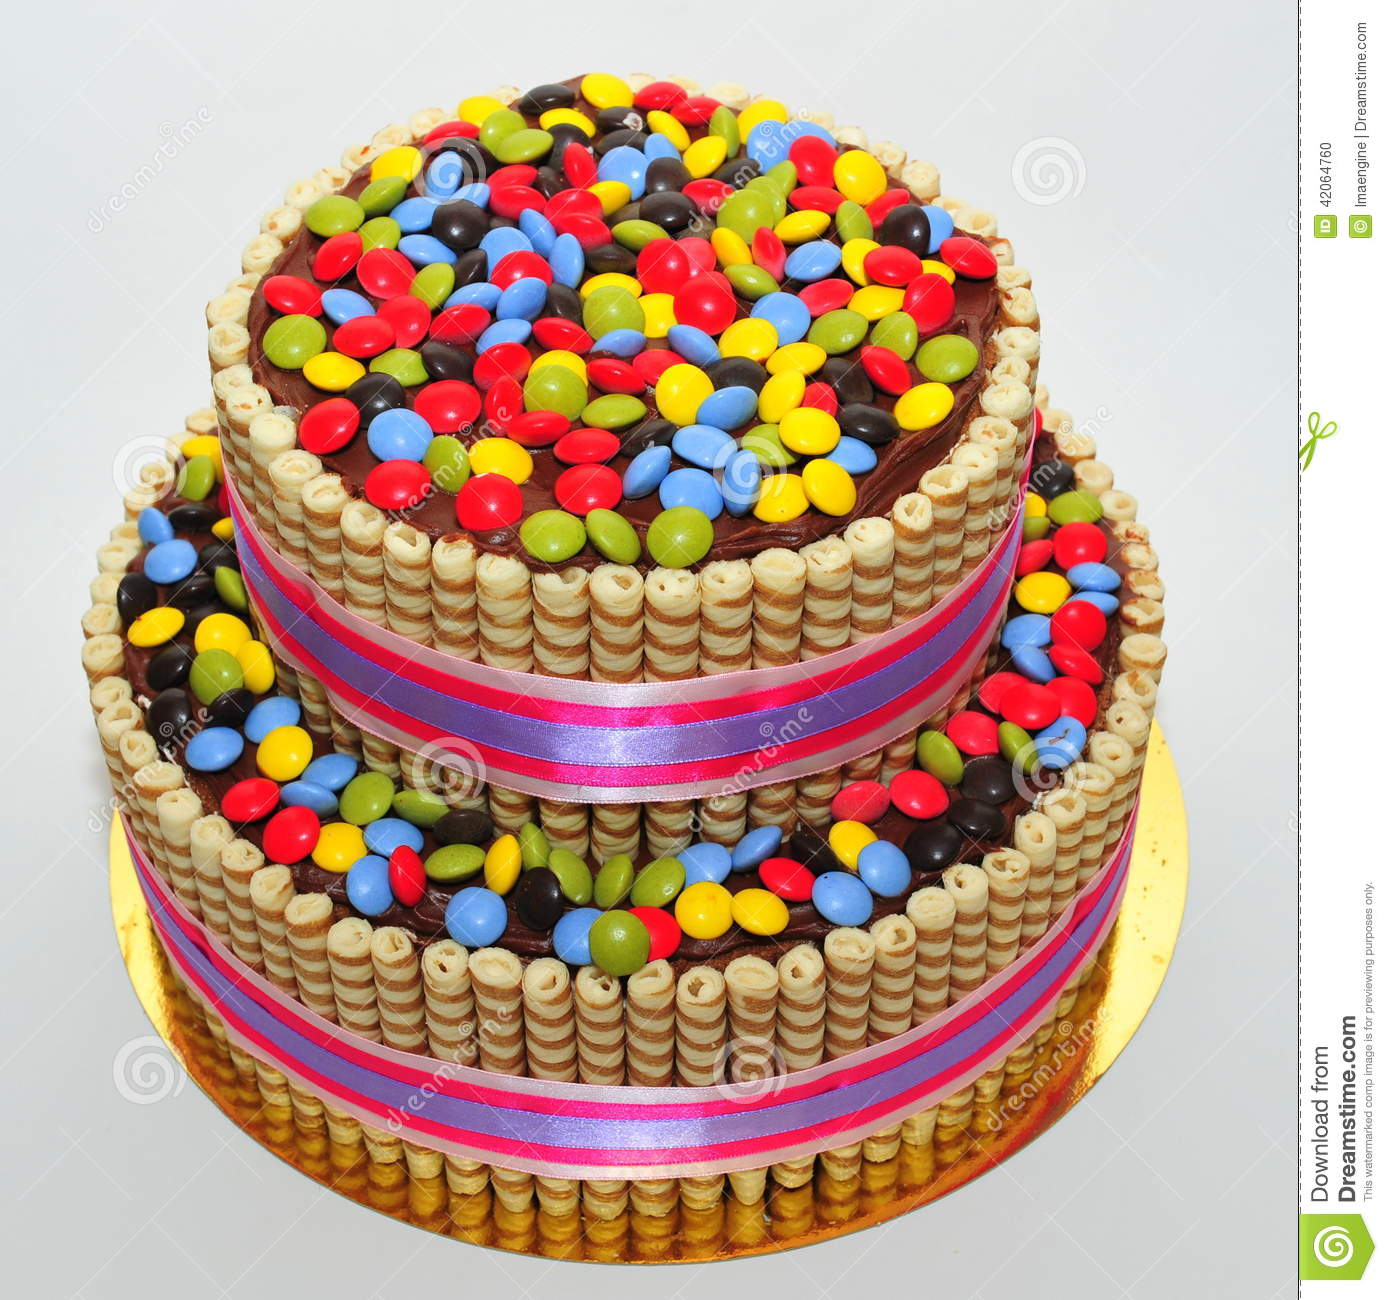 Chocolate Decorated Birthday Cakes